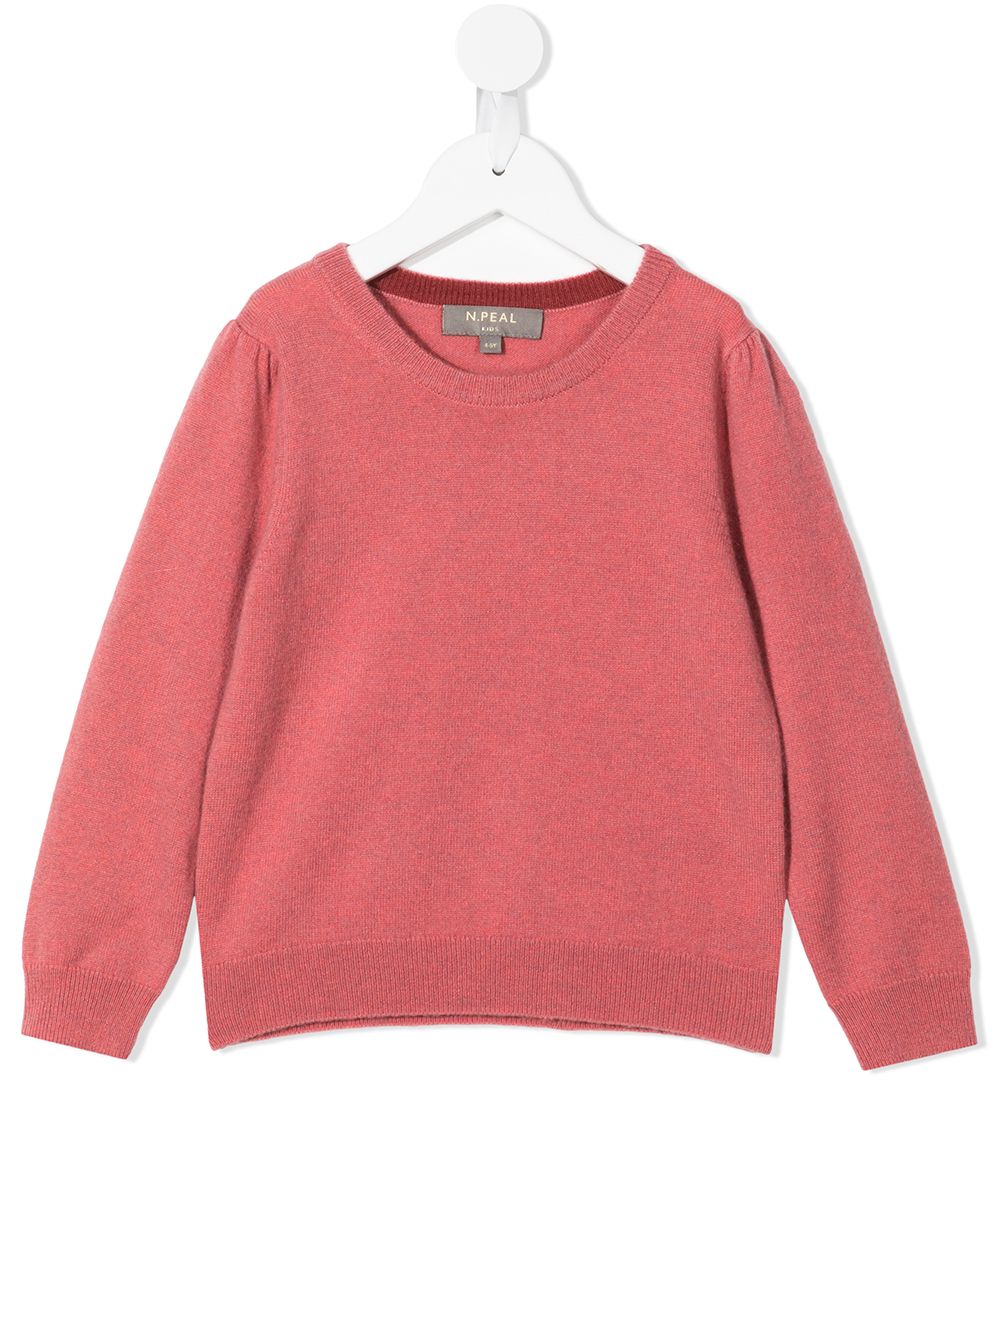 N.PEAL KIDS organic cashmere knitted jumper - Pink von N.PEAL KIDS